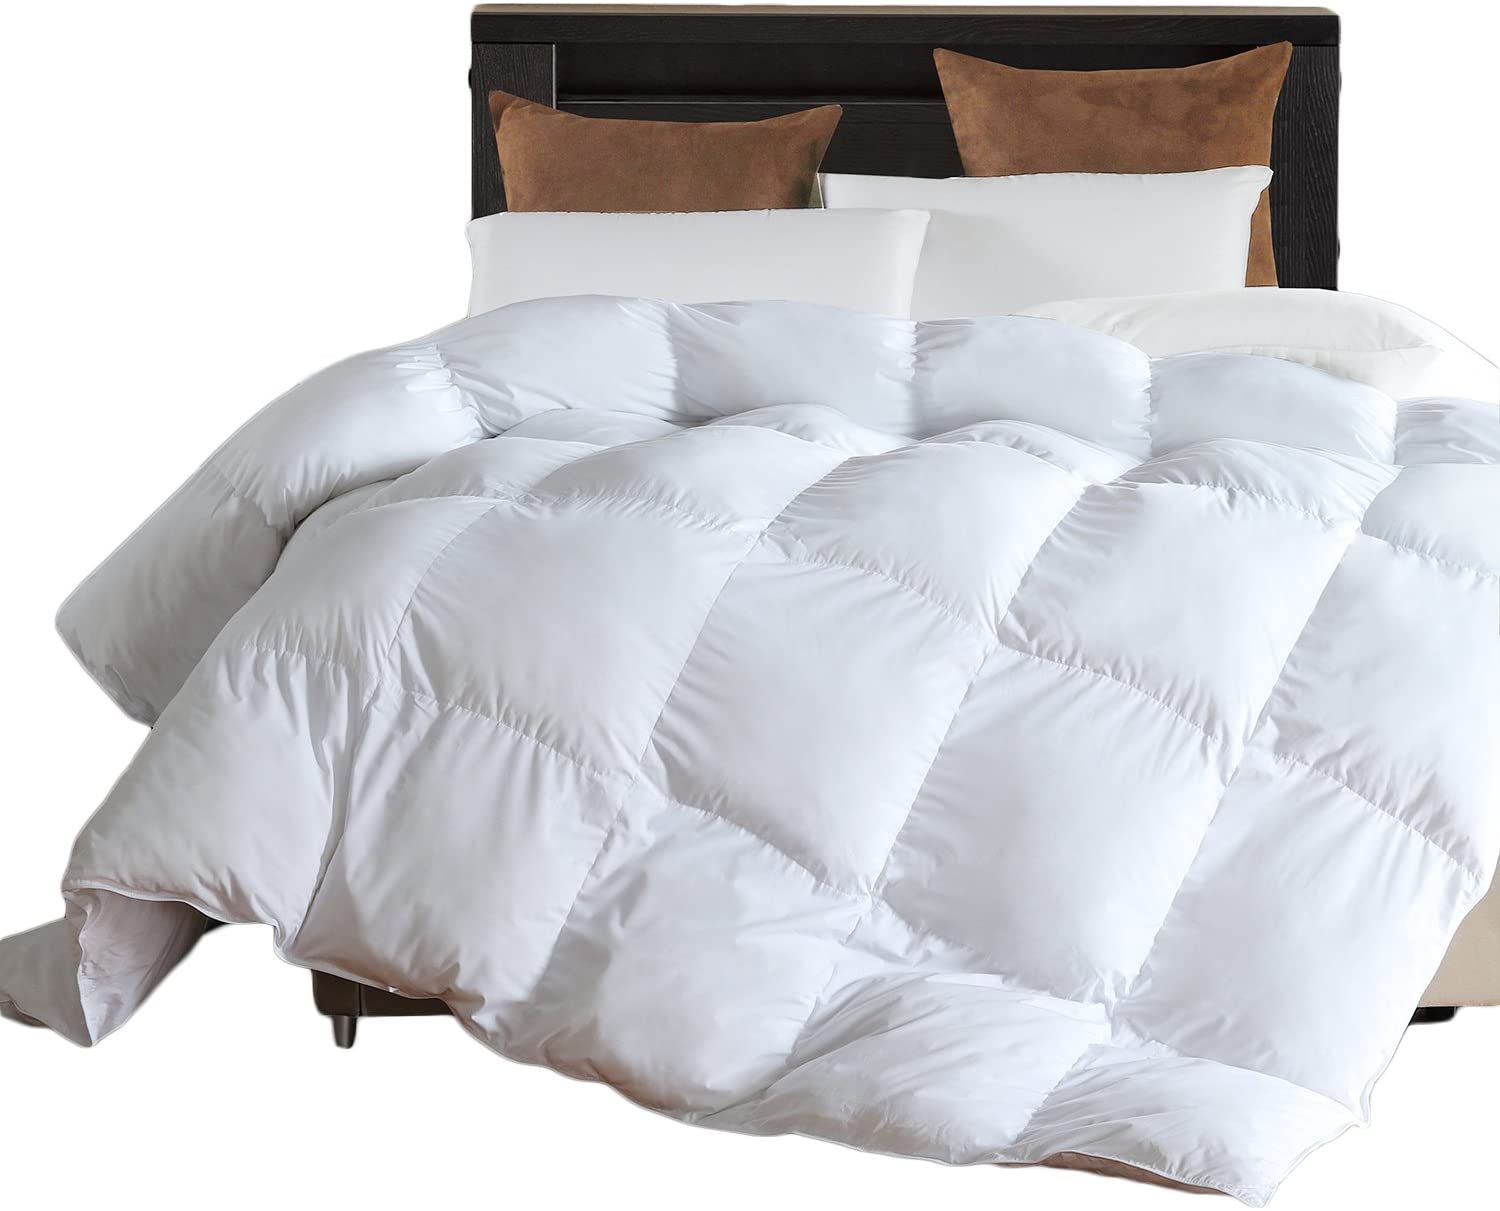 Price:$34.99  Comforter Duvet Insert White-Soft Plush Fiber Fill,Lightweight Down Alternative Comforter by L LOVSOUL (68x90Inches) Comforter : Home & Kitchen